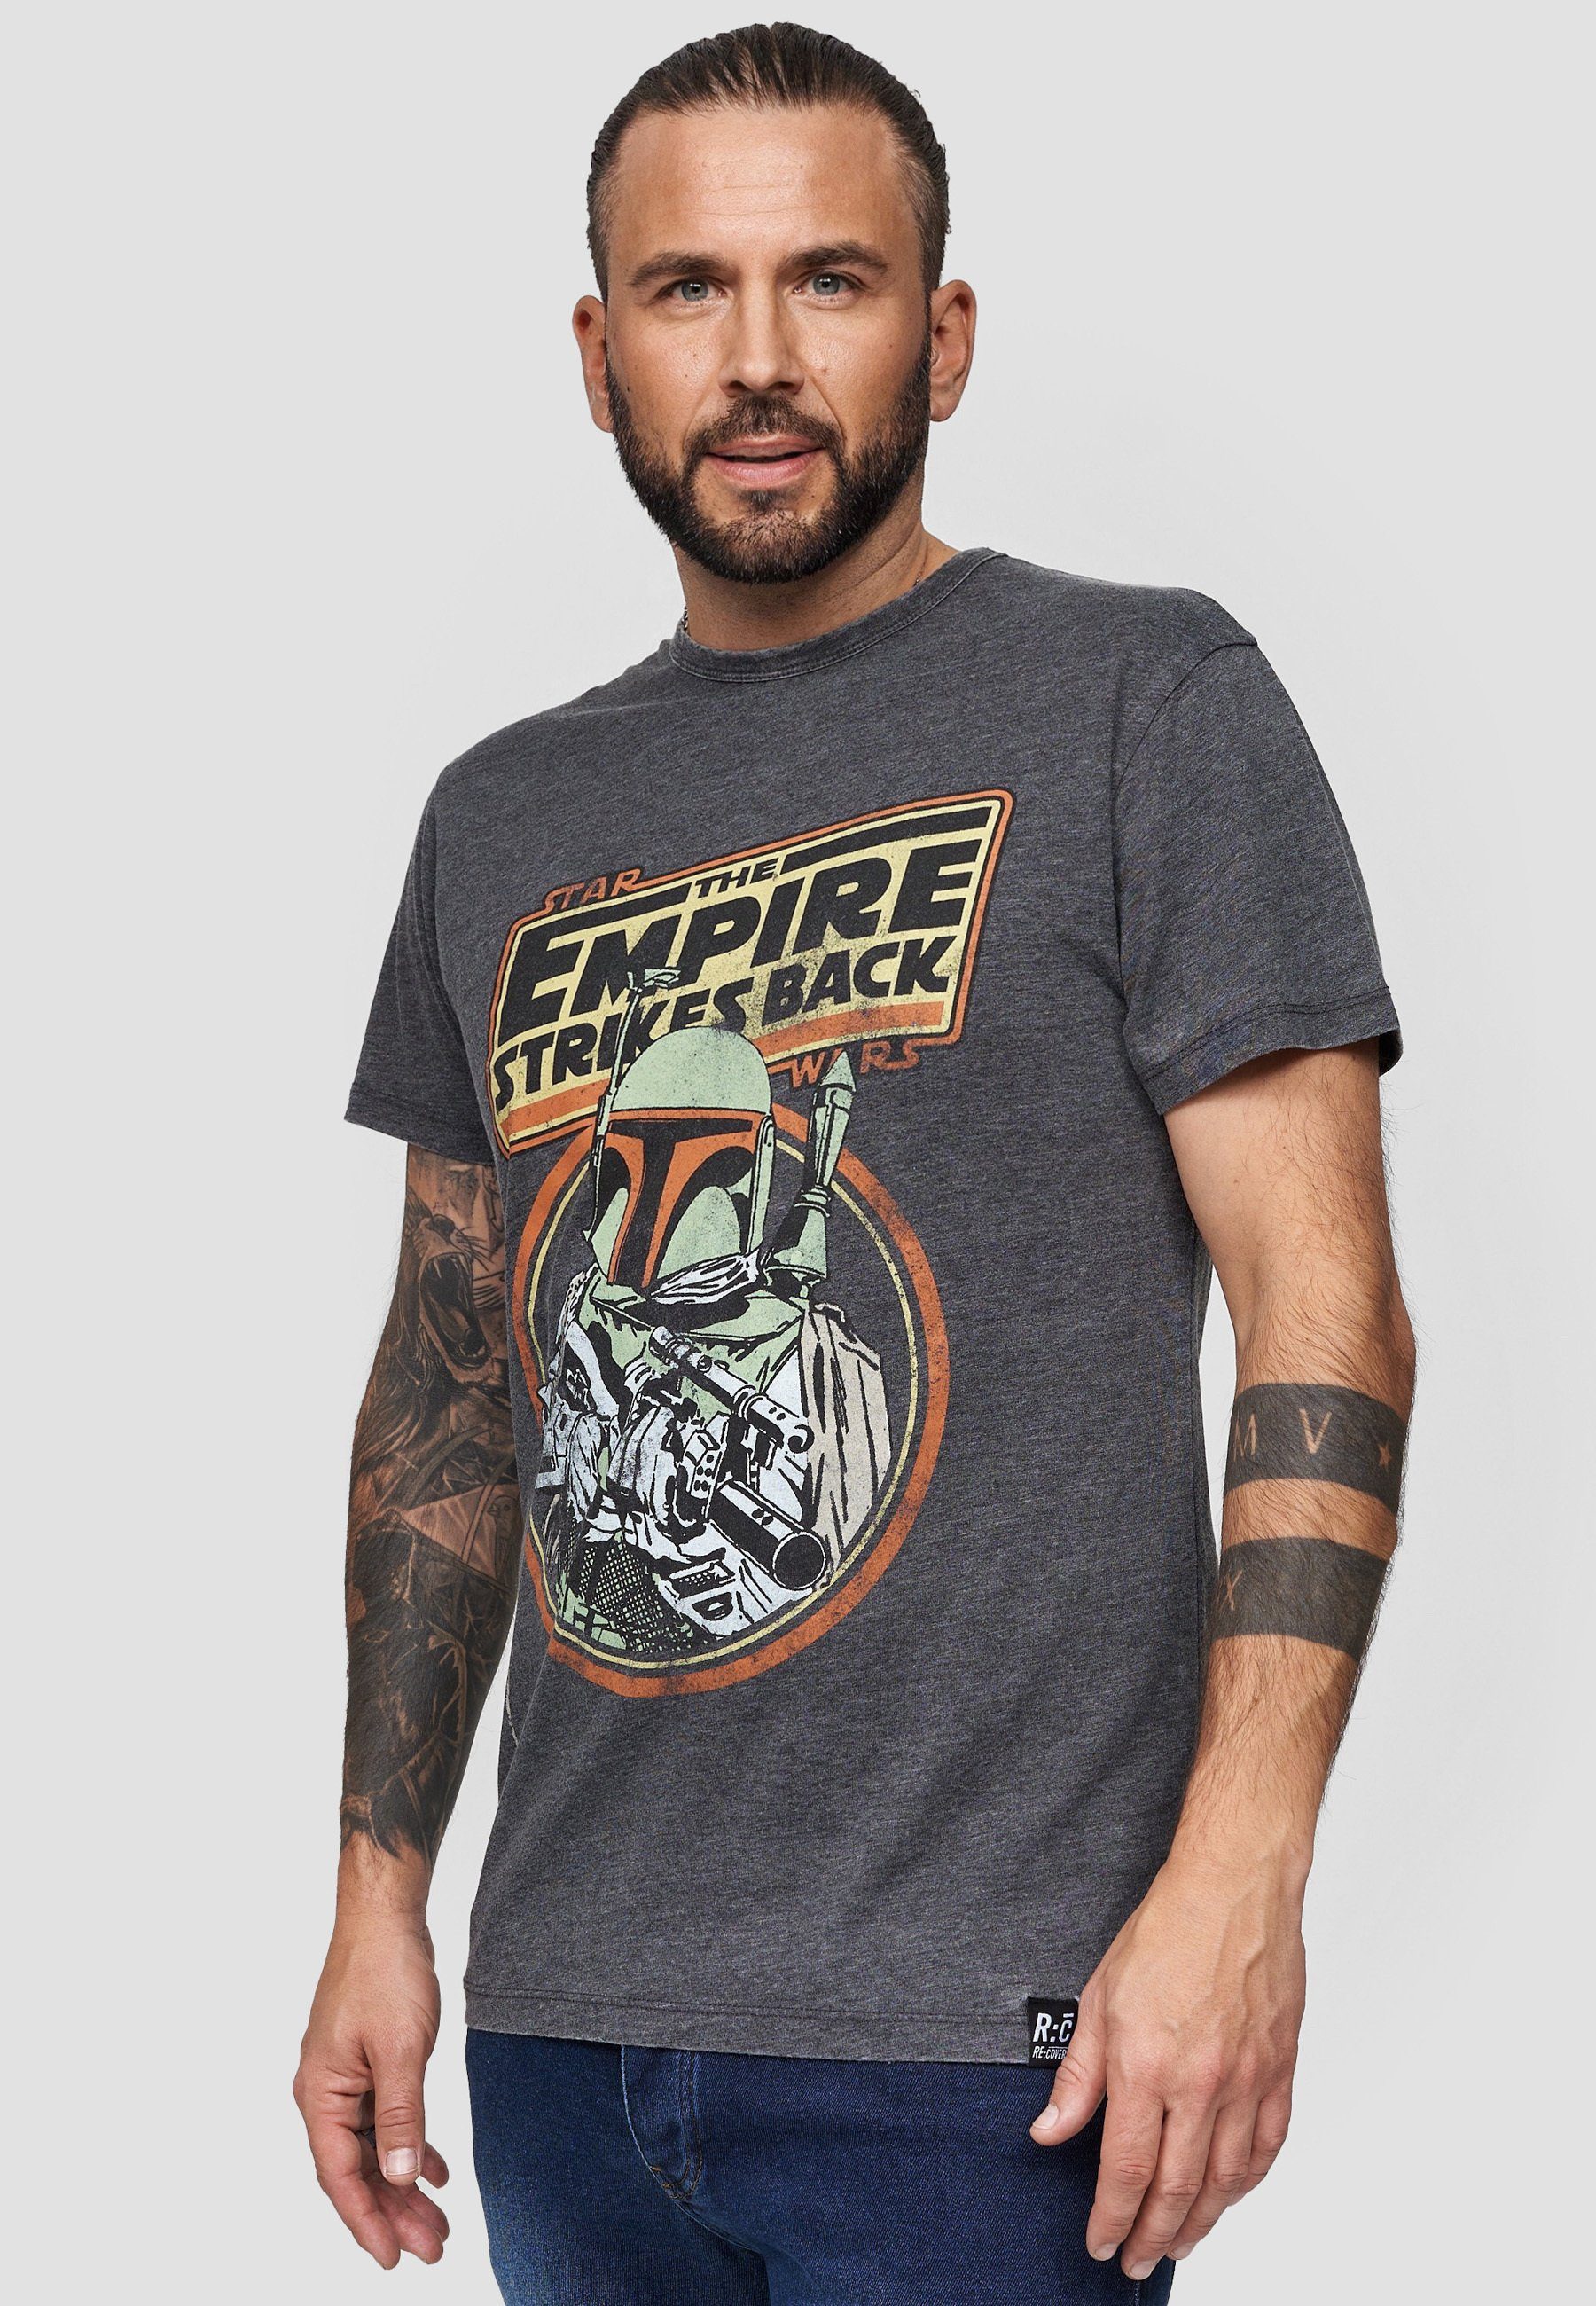 Empire T-Shirt zertifizierte Bio-Baumwolle Star Strikes Fett Boba The Wars GOTS Back Recovered